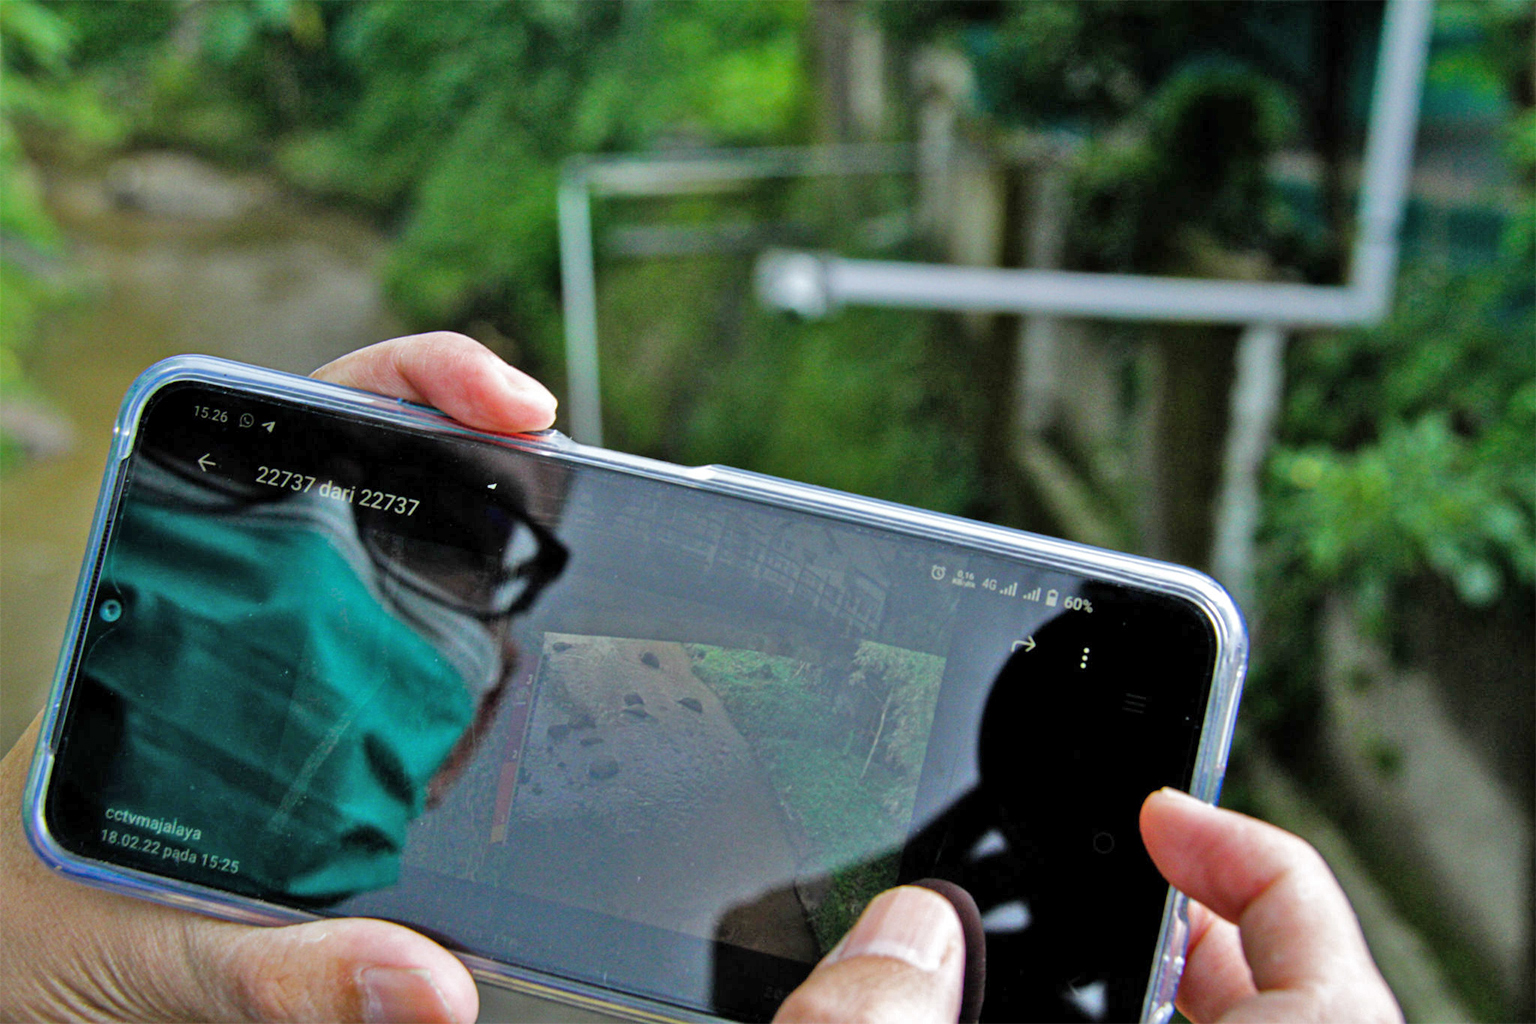 Riki Waskito uses his phone to monitor water levels